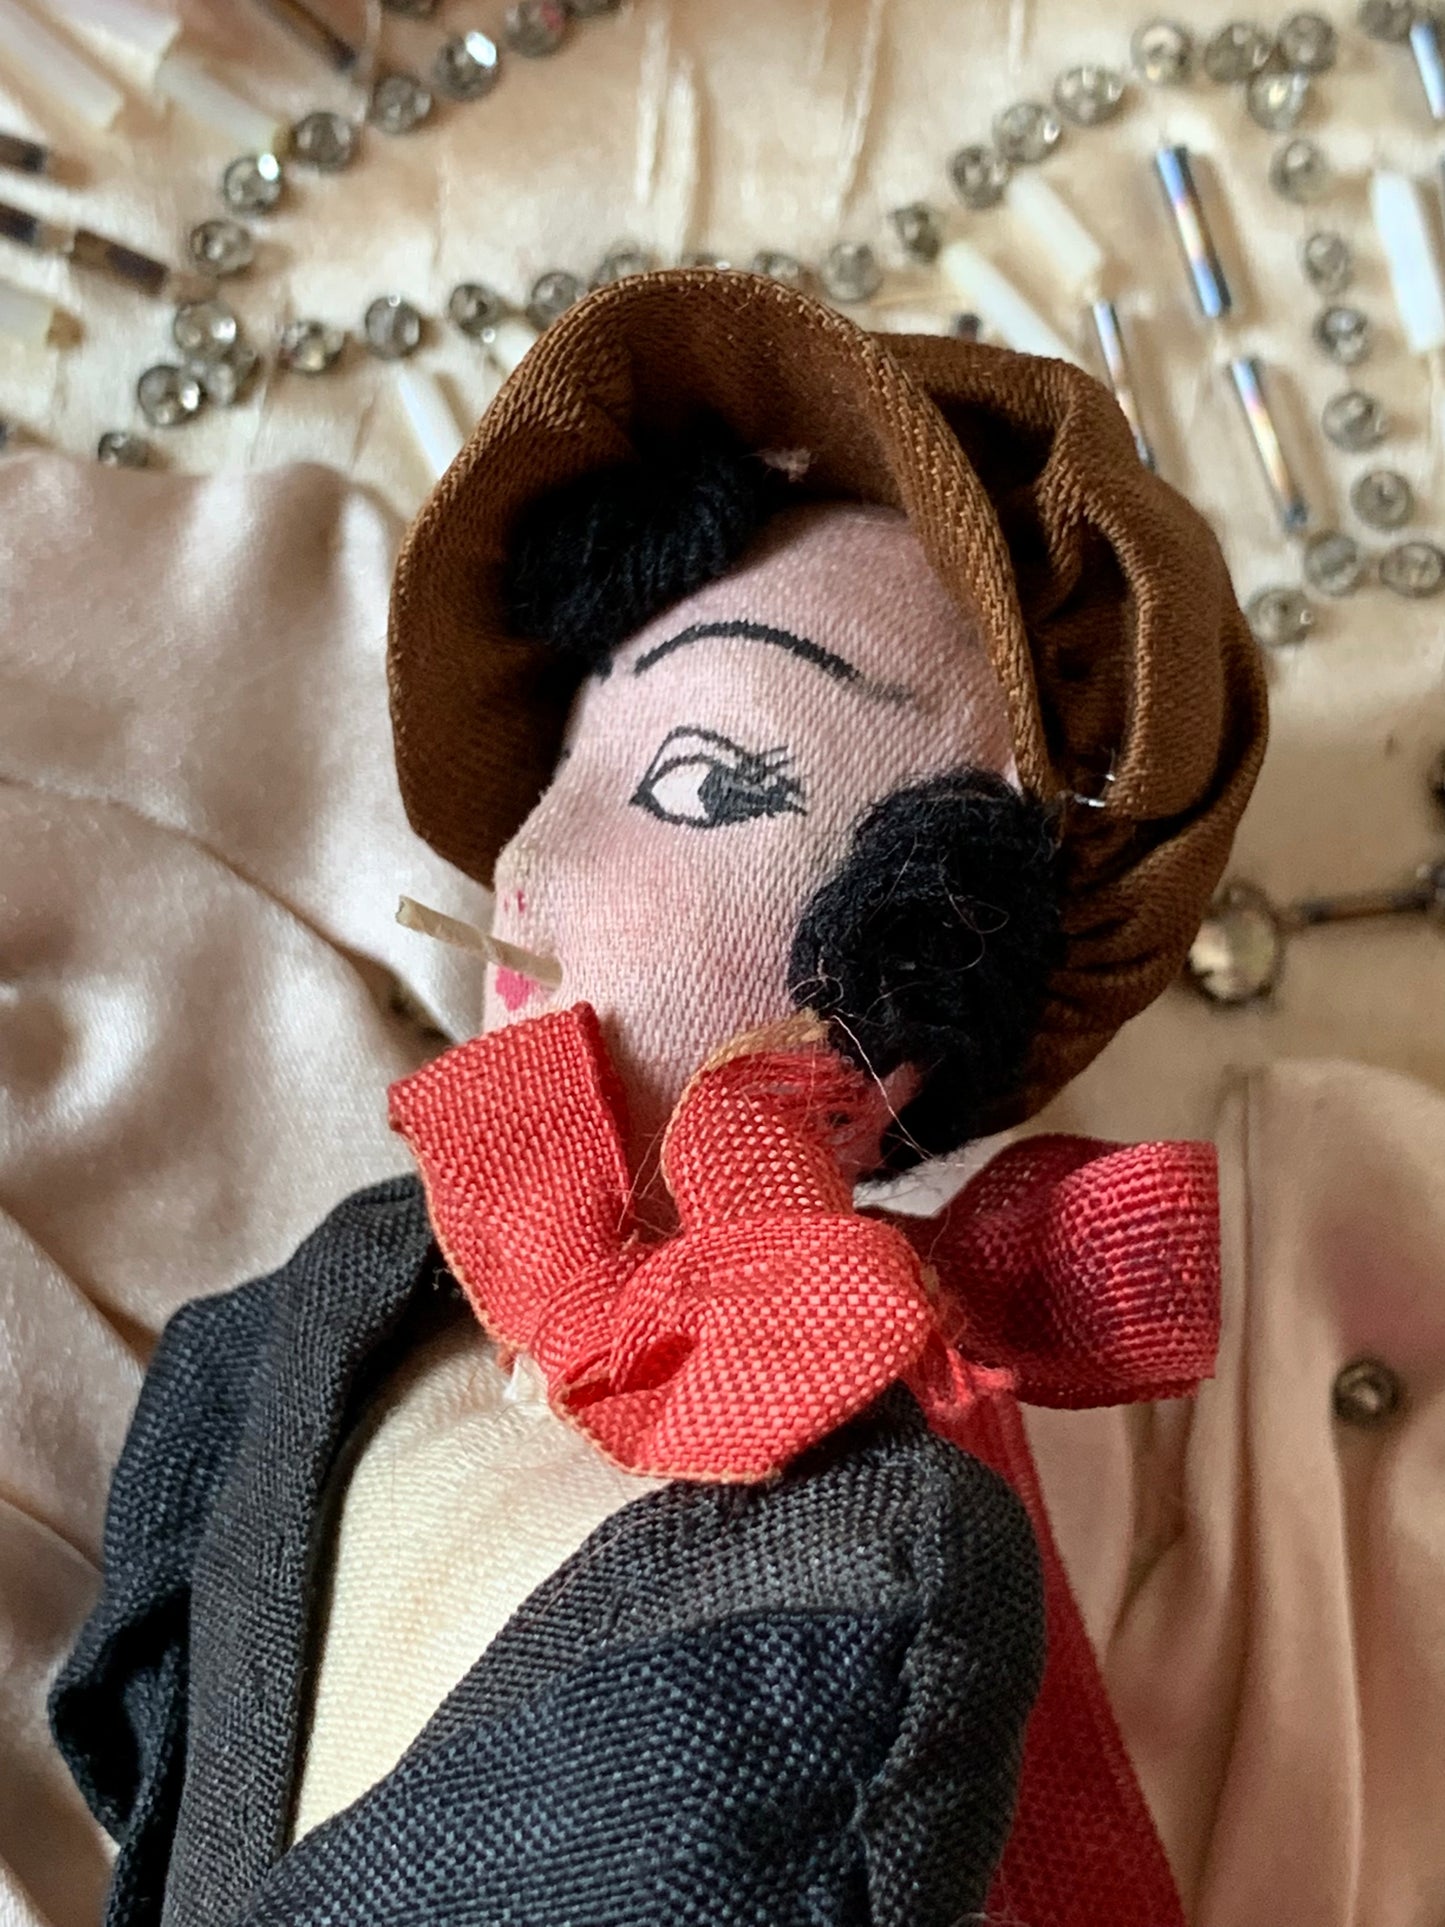 Vintage miniature smoker doll